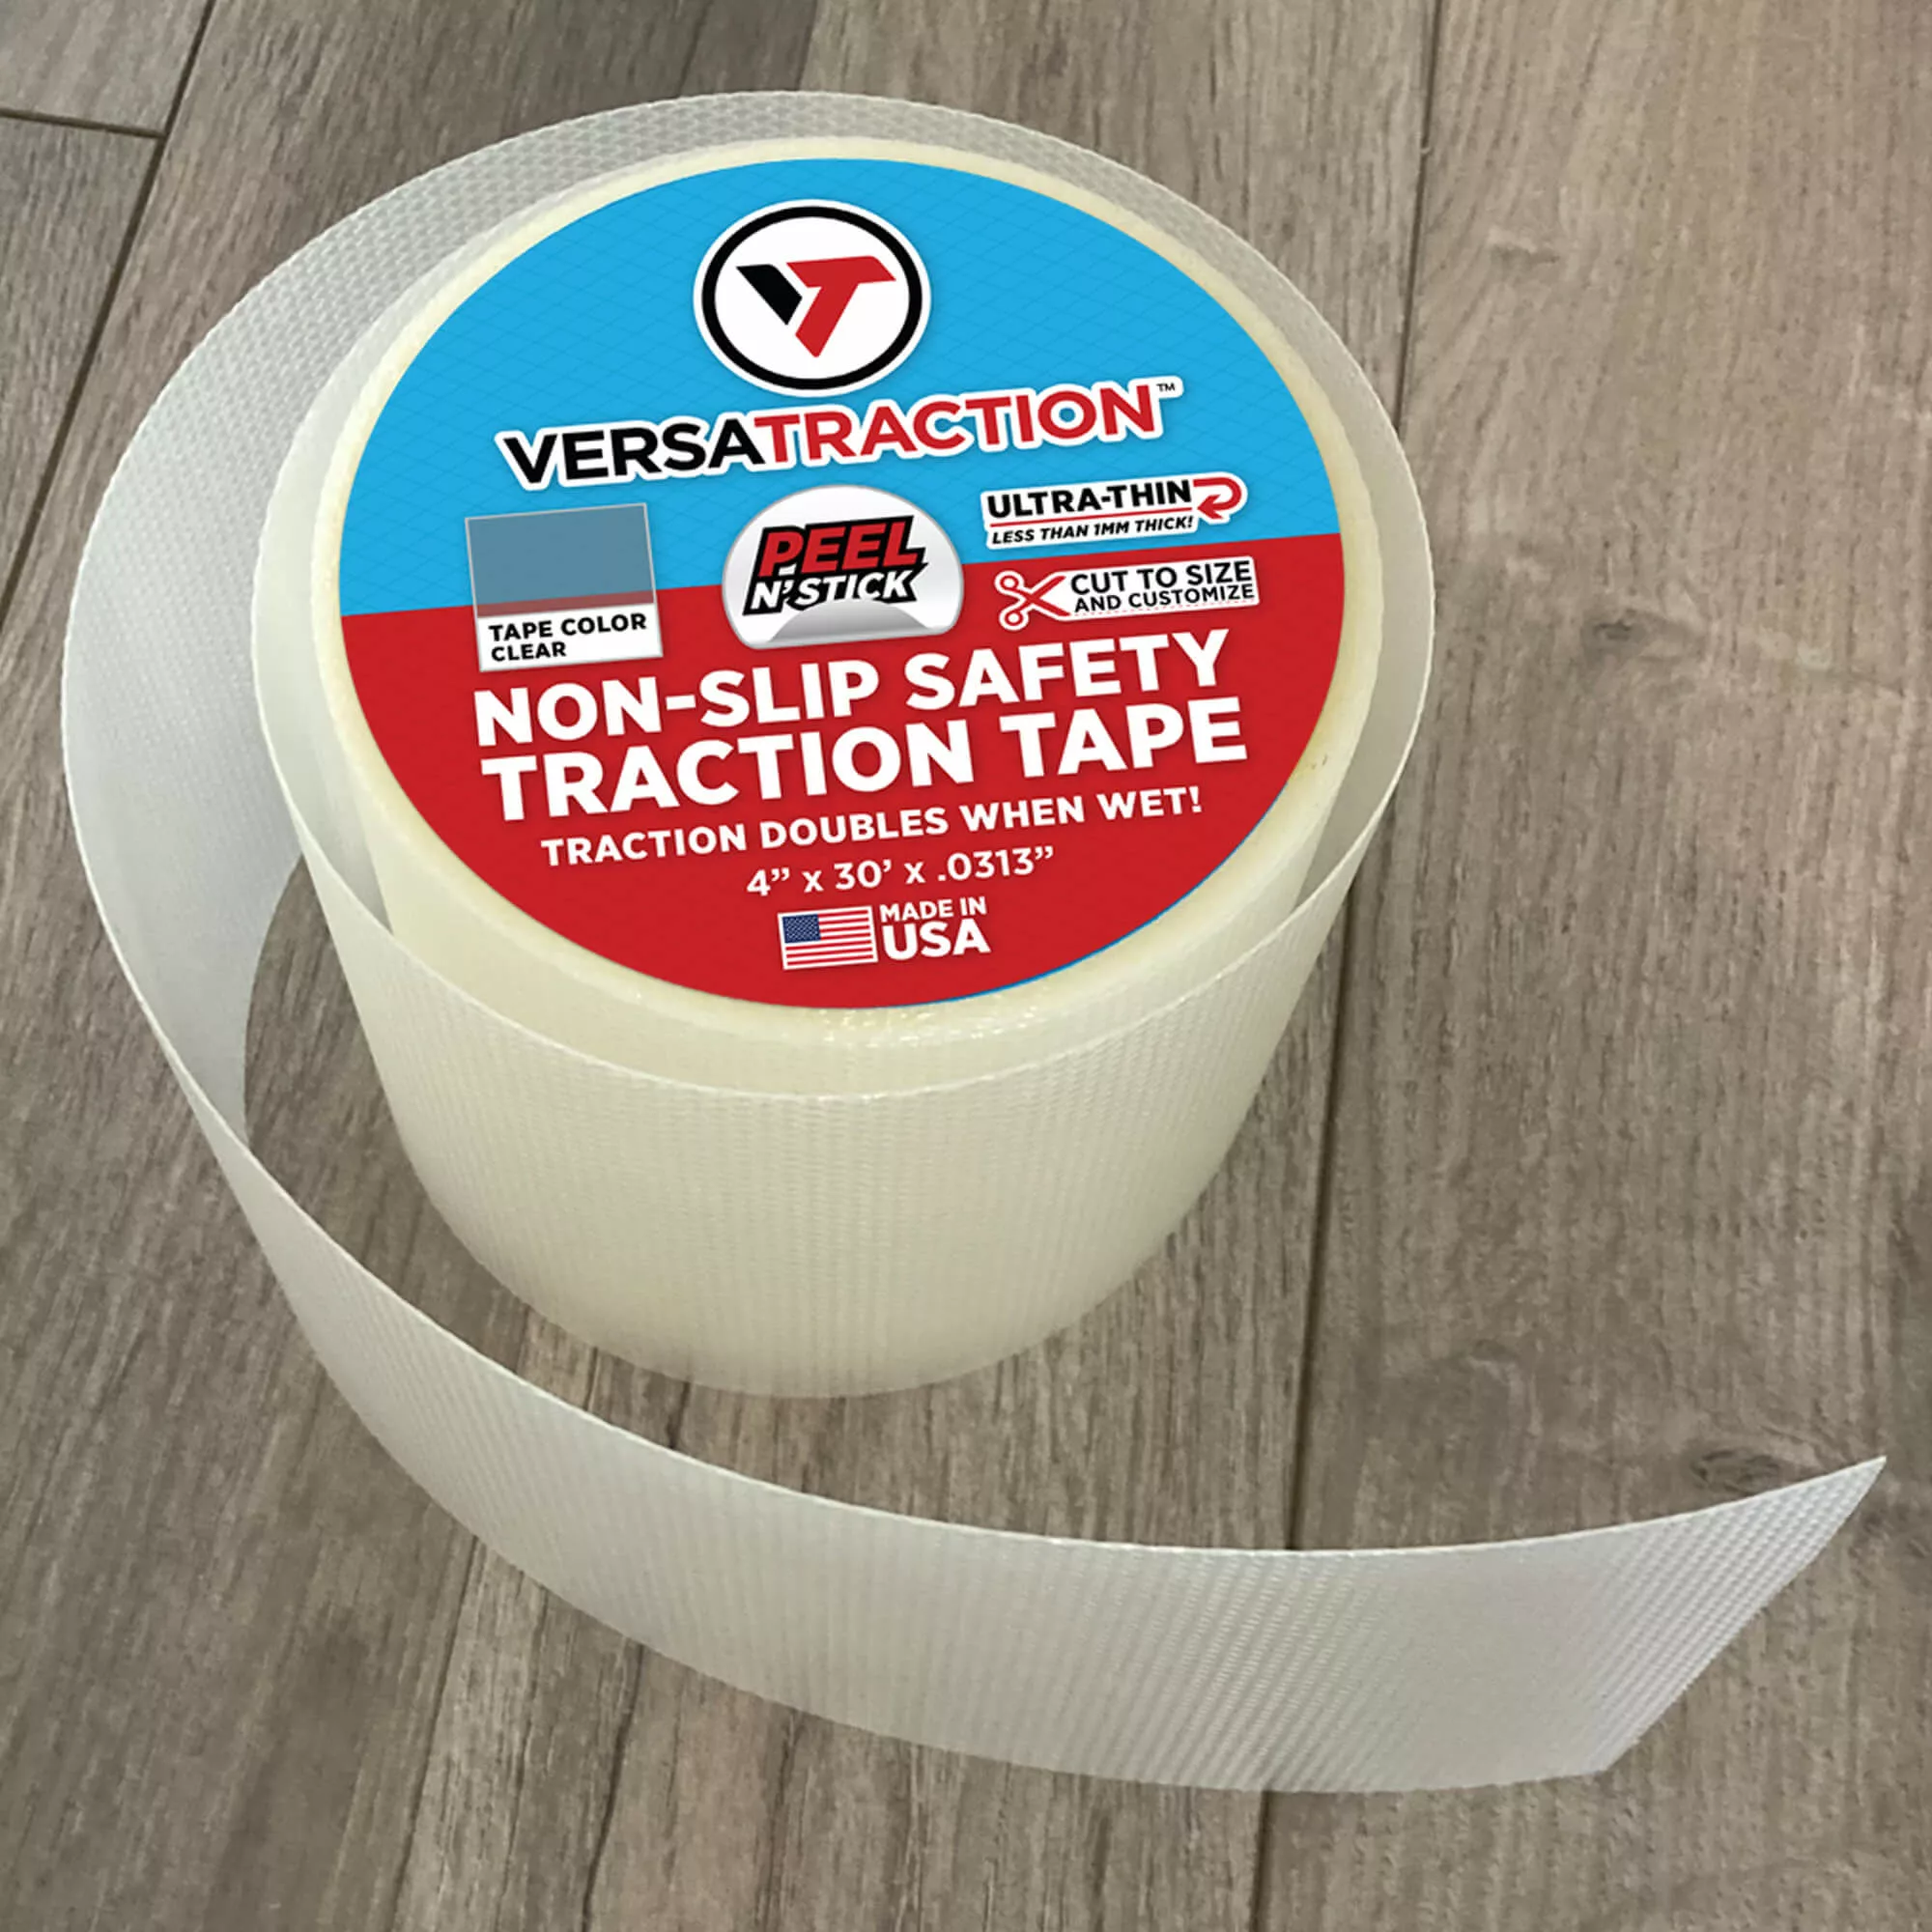 VersaTraction™ Non-Slip Safety Traction Tape